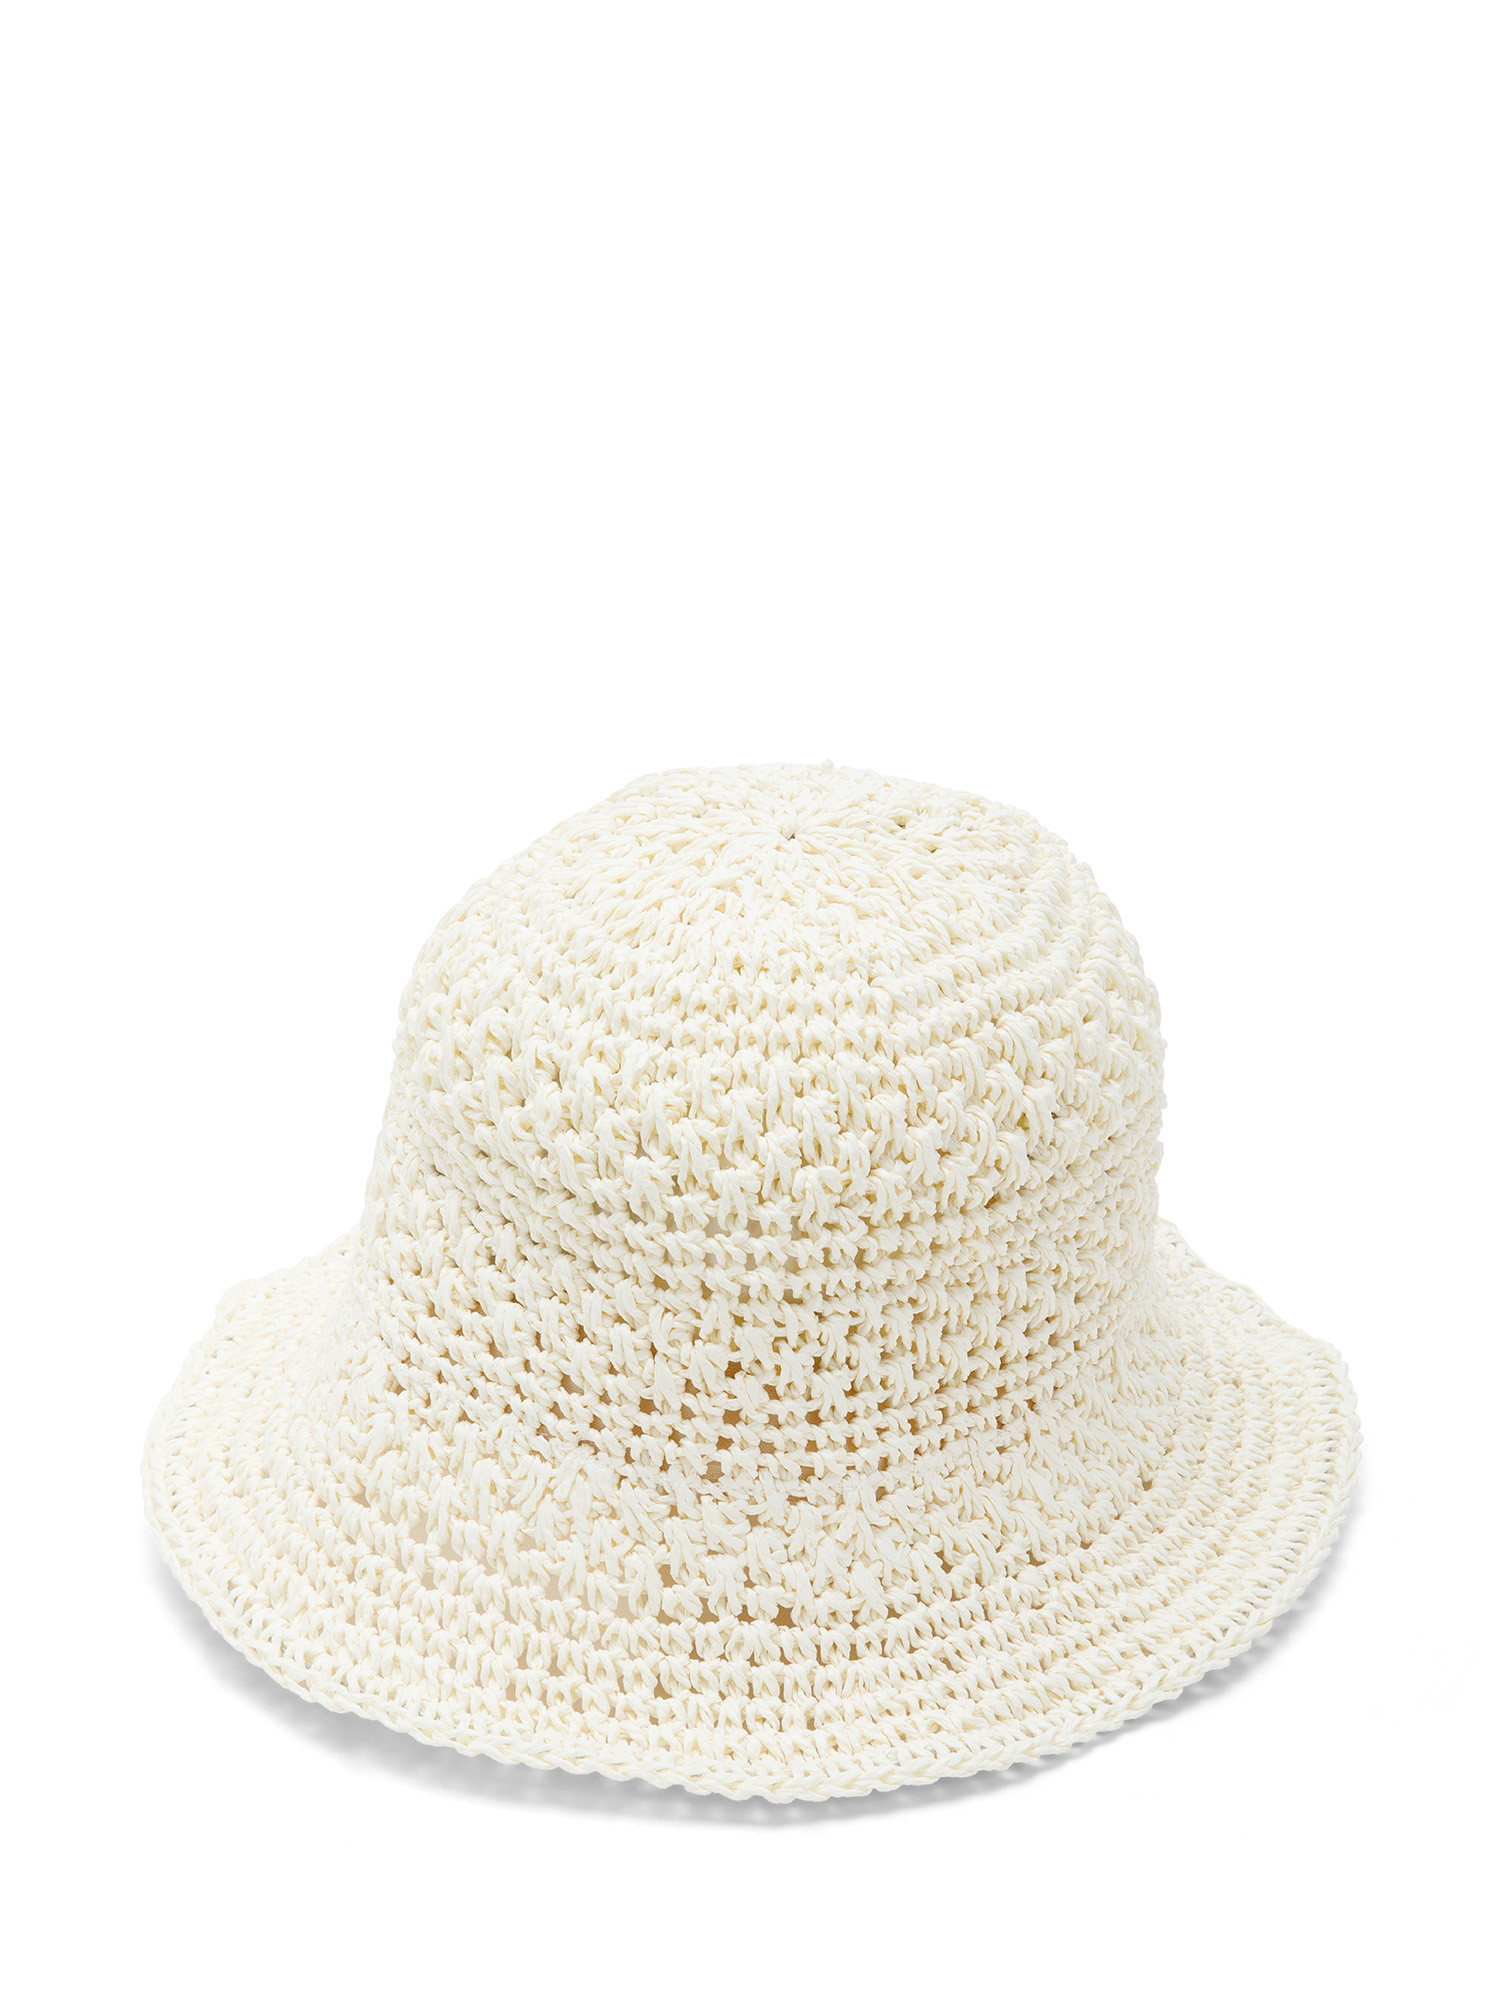 Koan - Braided hat, Beige, large image number 0